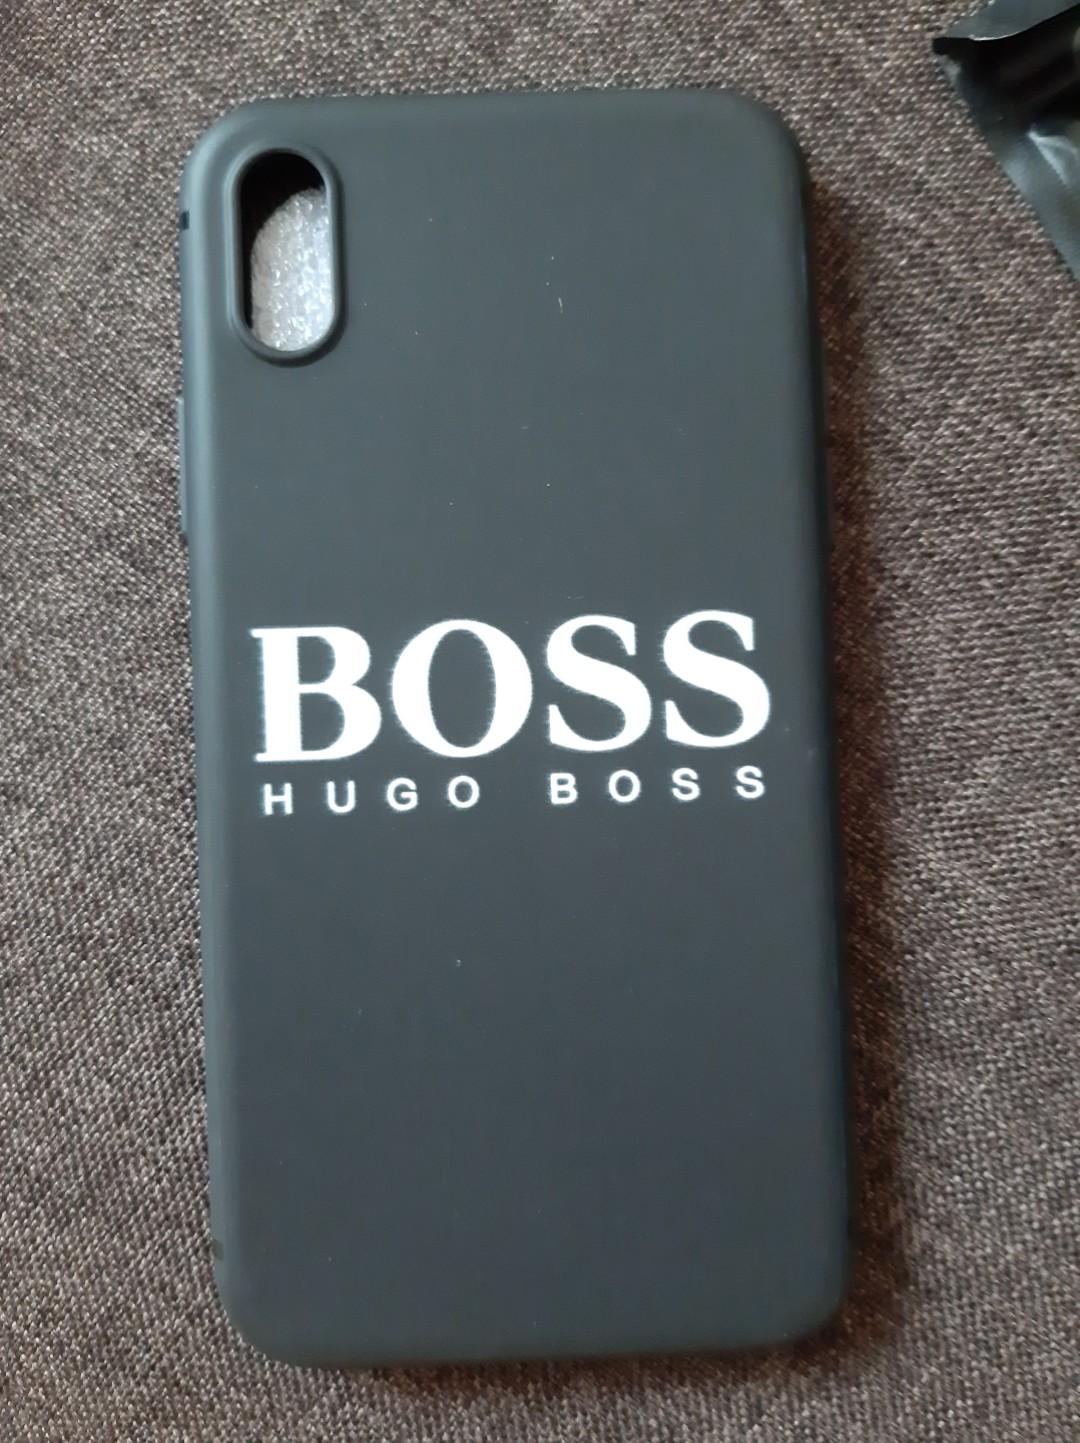 iphone x case hugo boss